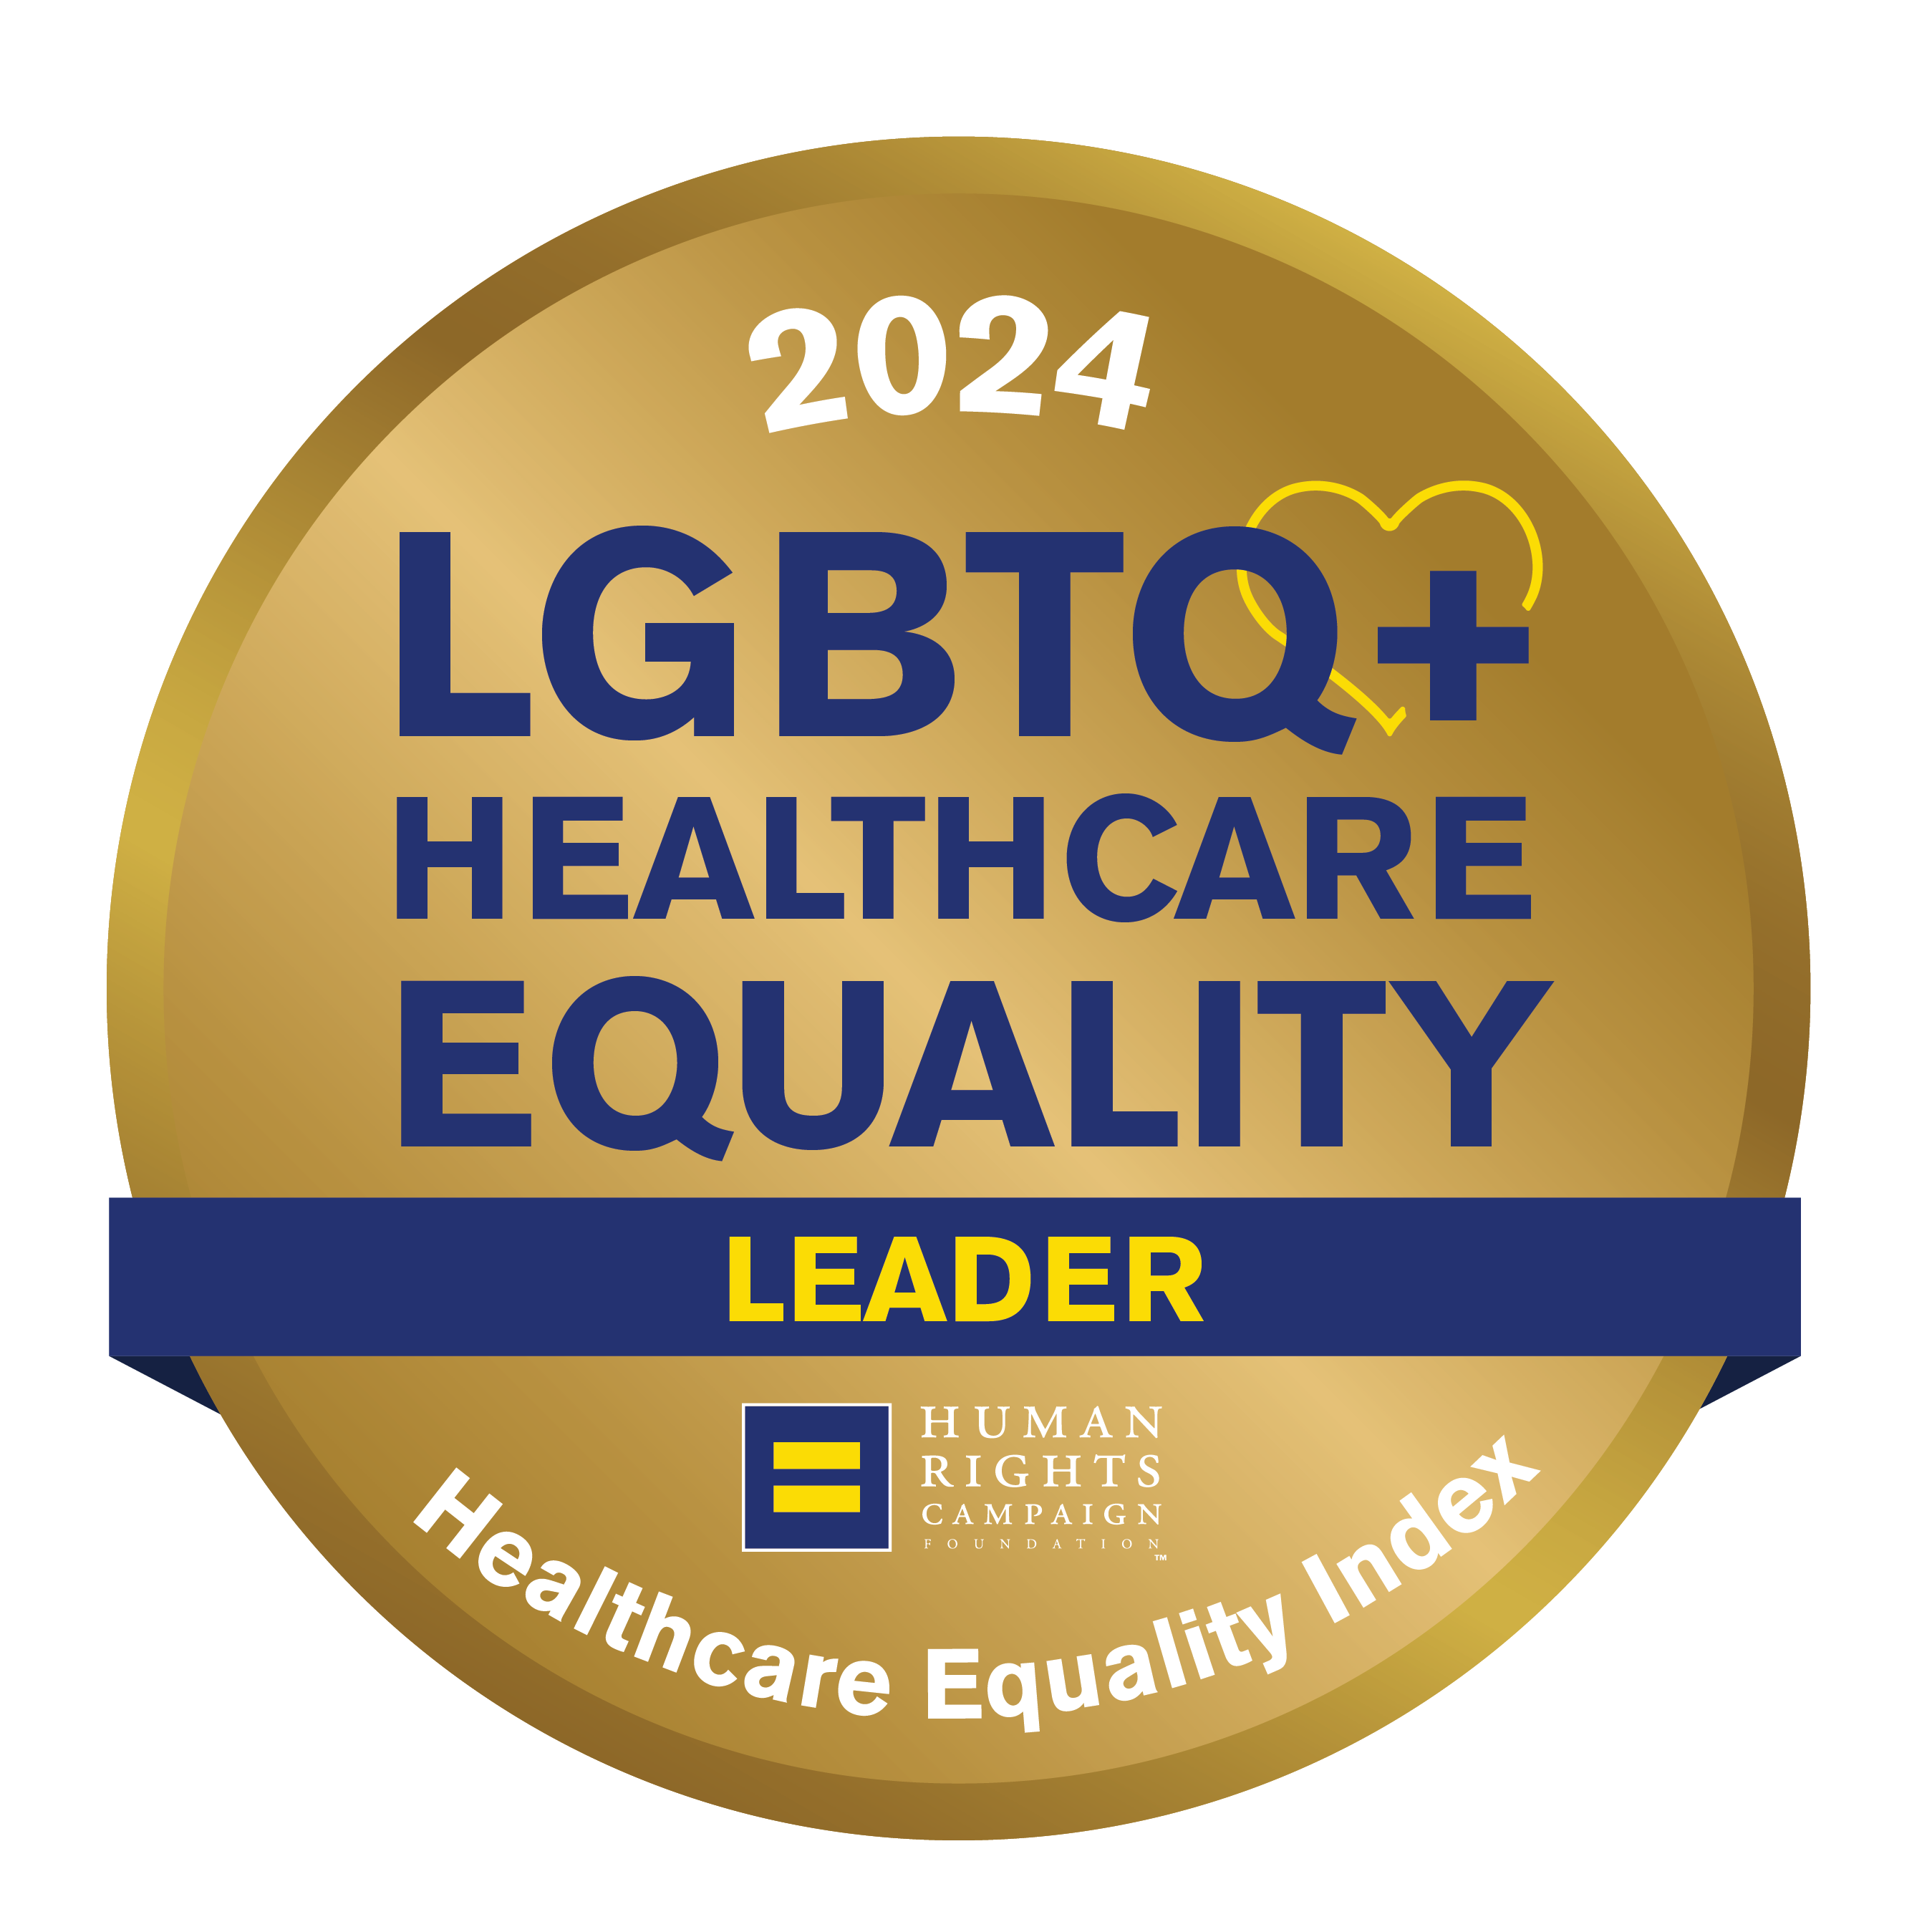 LGBTQ+ Healthcare Equality Leader